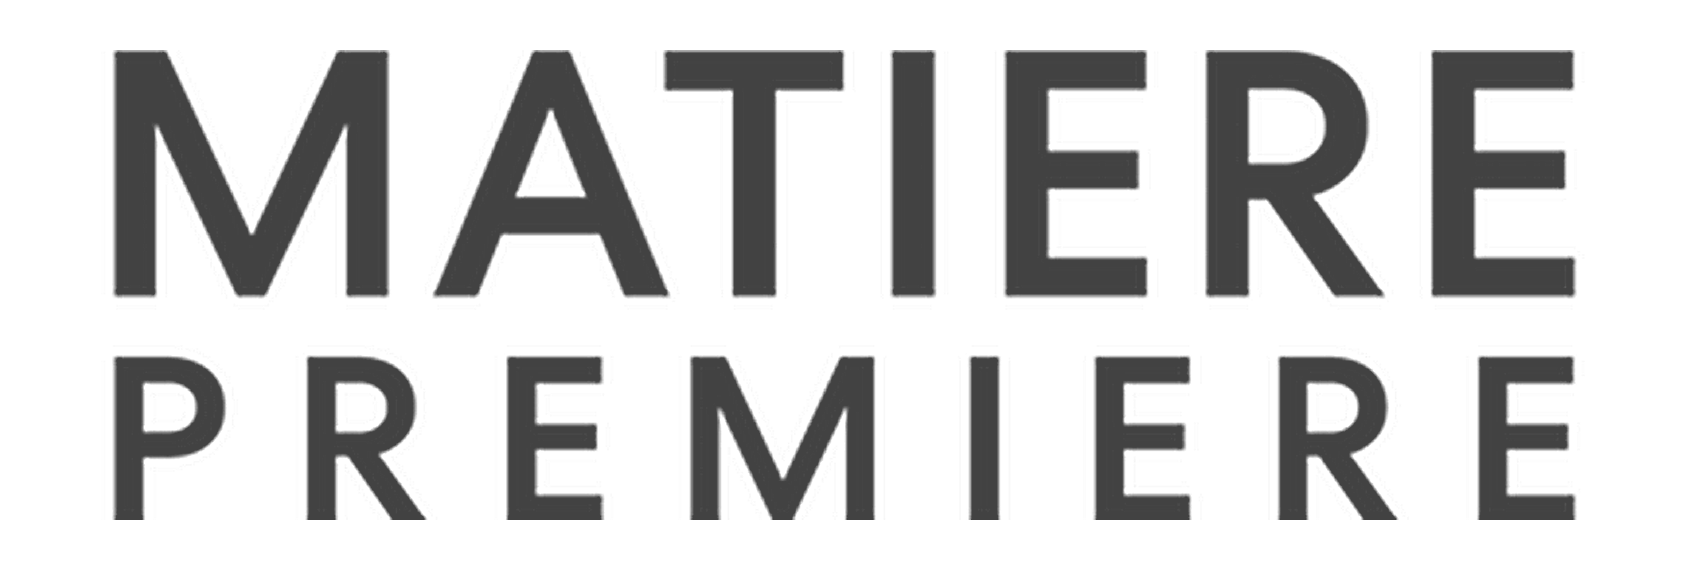 Matiere_Premiere_Logo